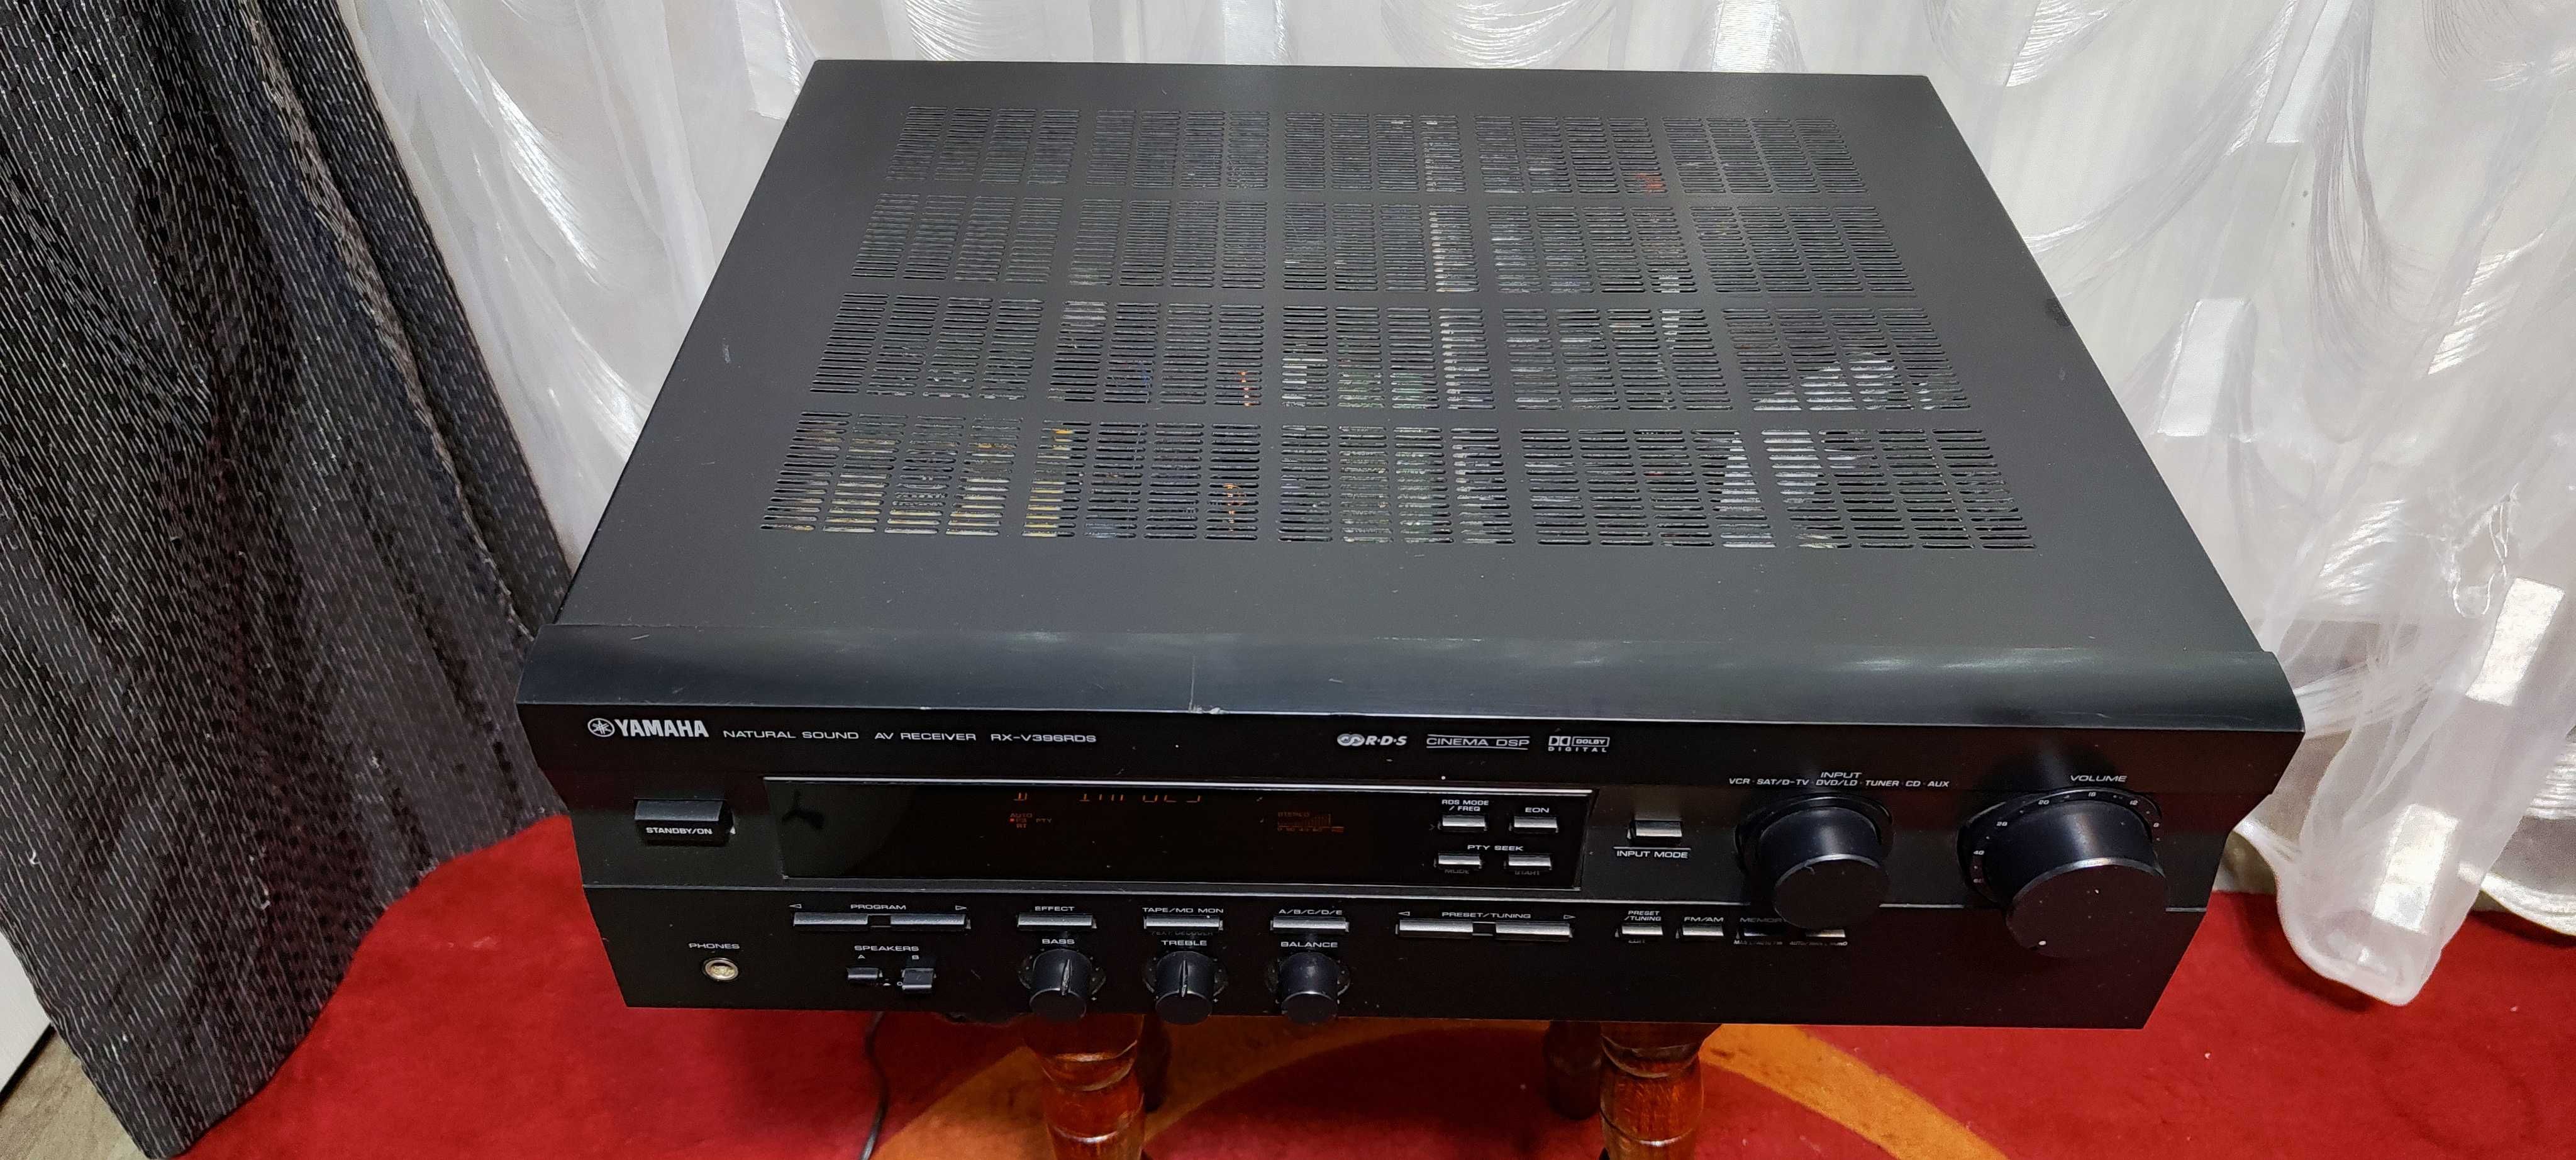 Amplificator Audio Yamaha RX-V396 Statie Audio Amplituner